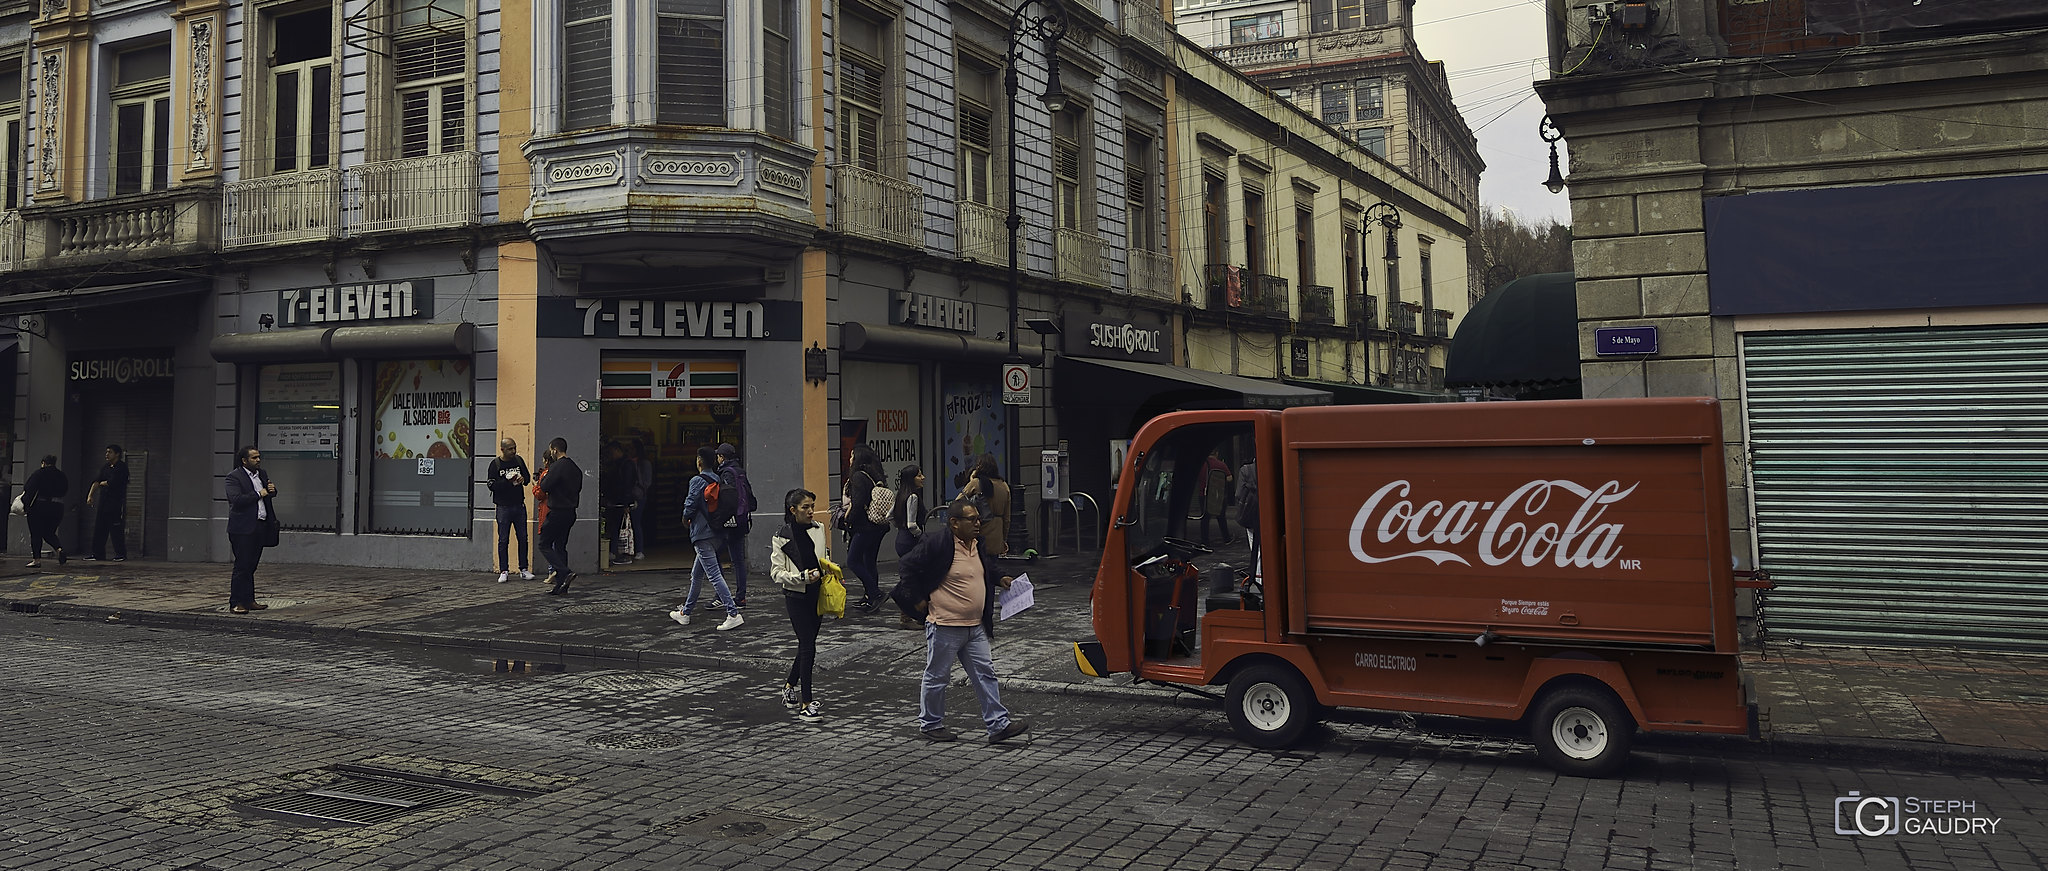 Coca Cola @ Mexico [Click to start slideshow]